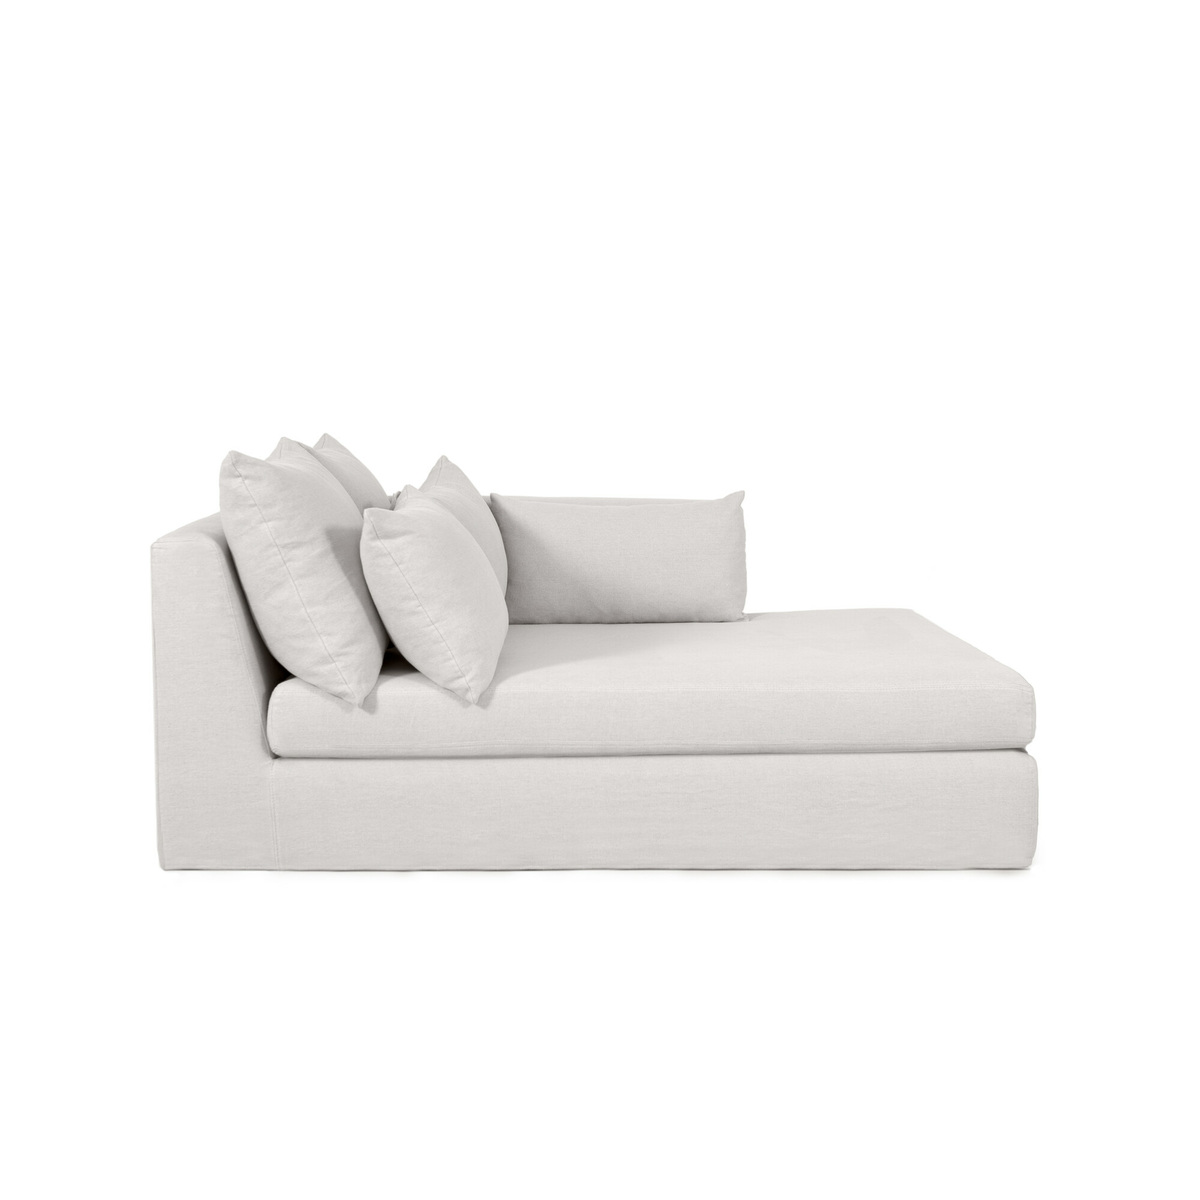 SuperBox sofa - Right armrest, L51 x D71 x H34 in - Cotton - image 3